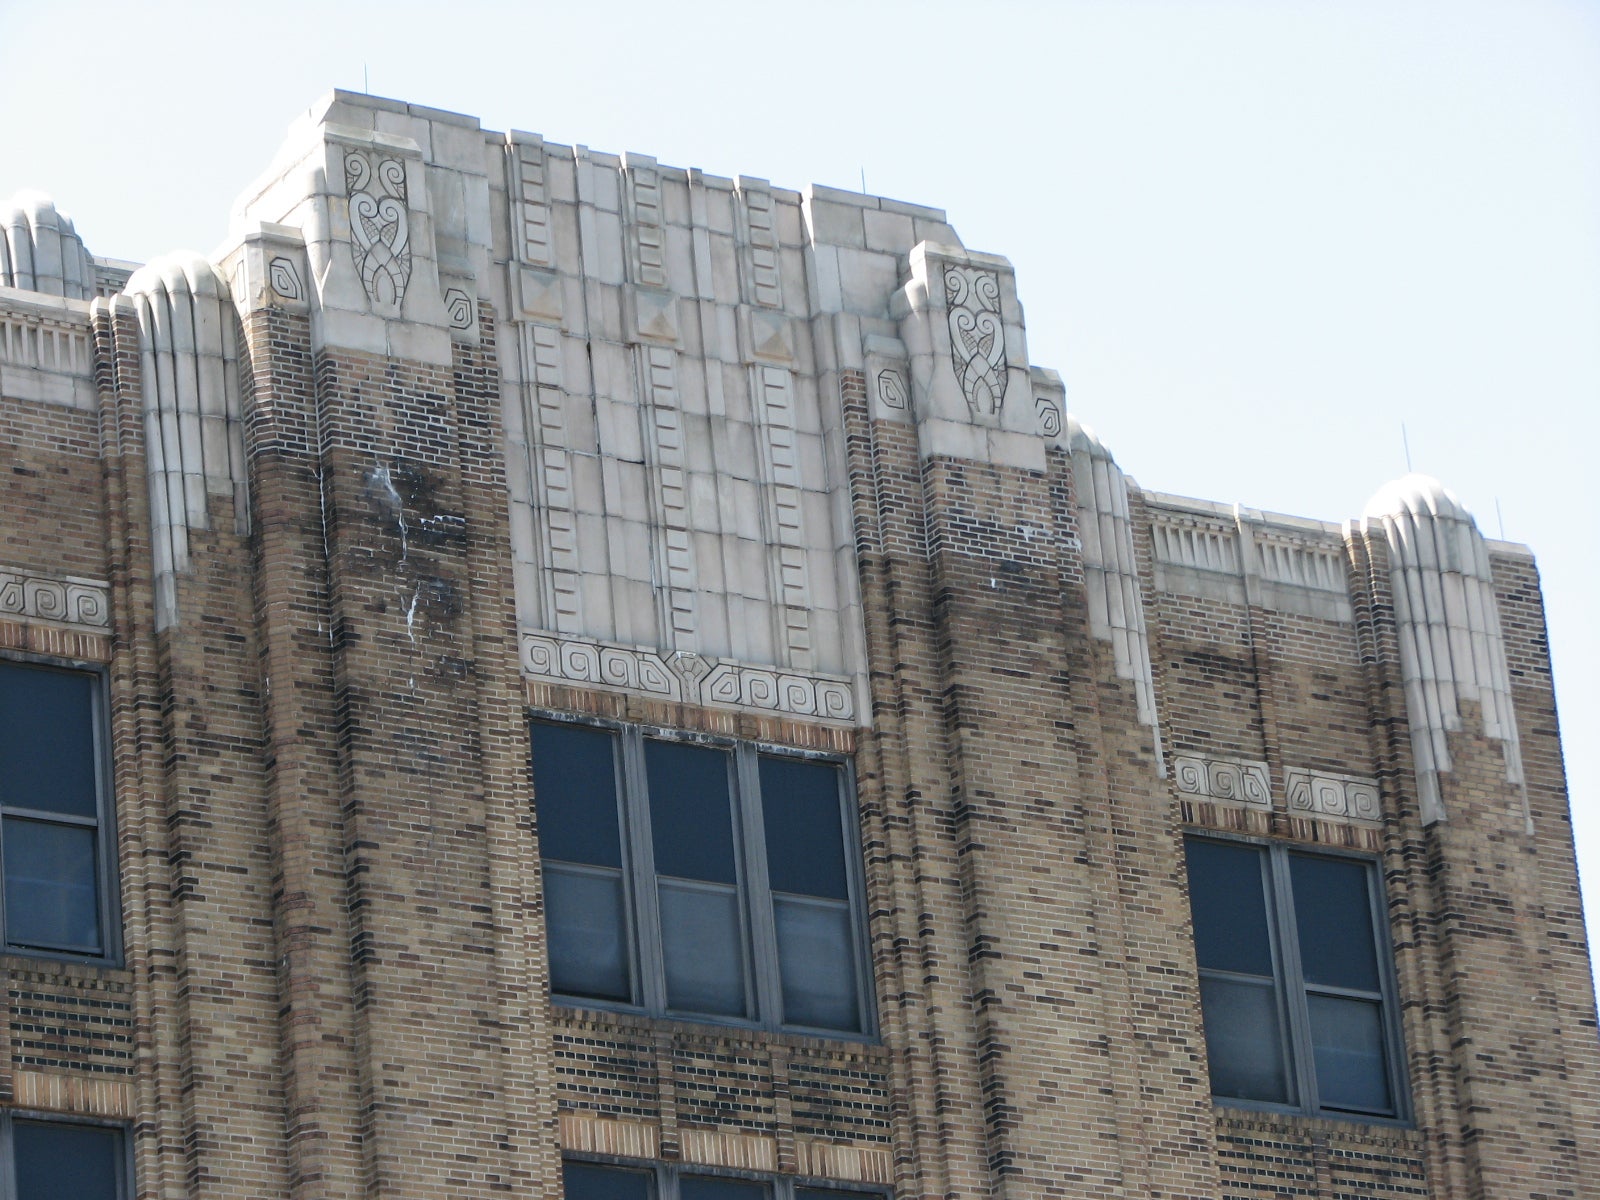 Elaborate Art Deco designs are scrawled into the school building piers.